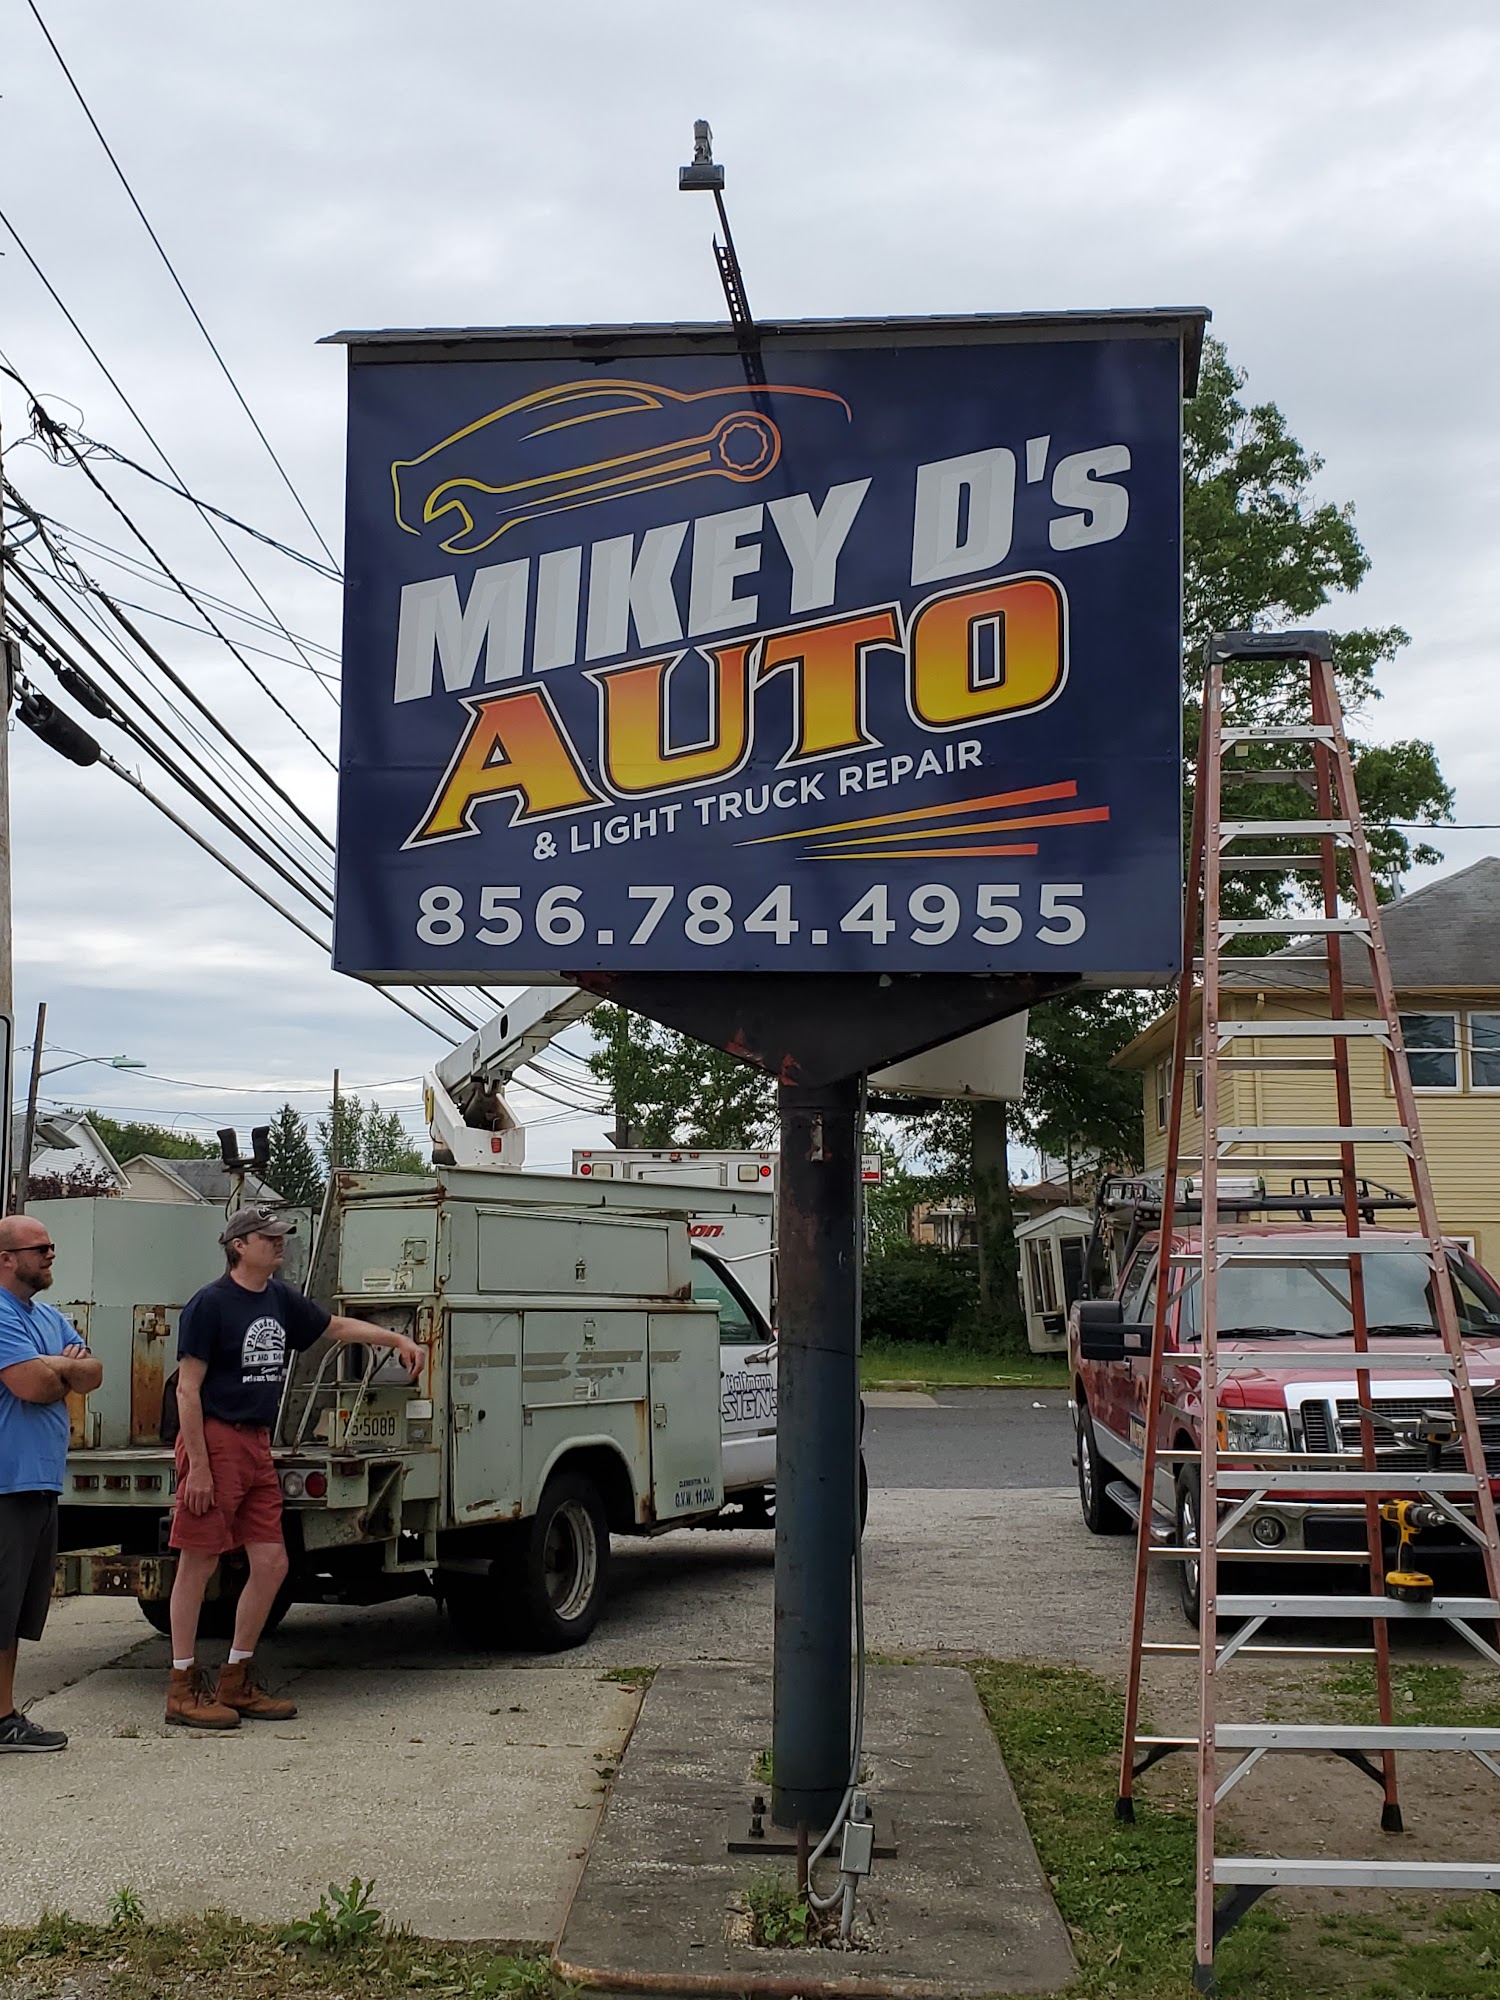 Mikey D's Auto, LLC